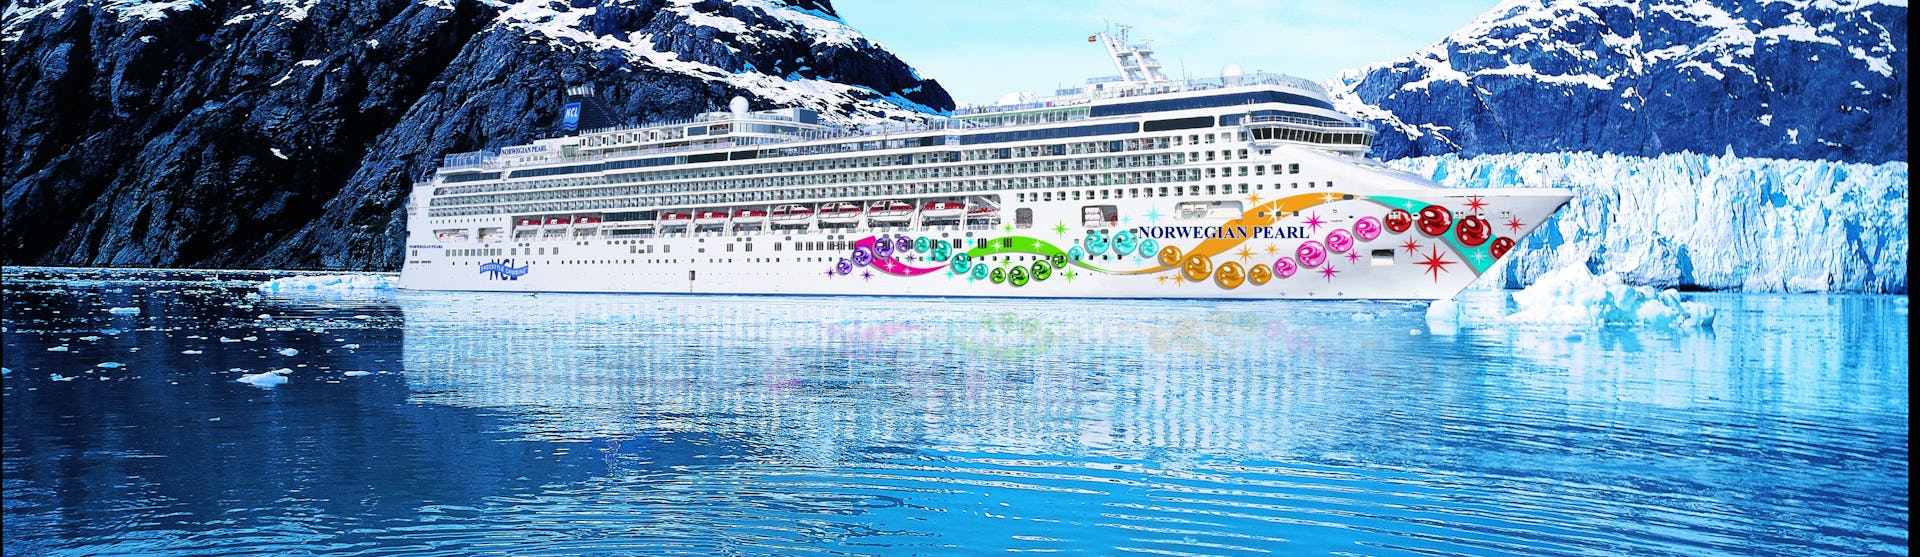 Norwegian Pearl - Norwegian  Cruise Line